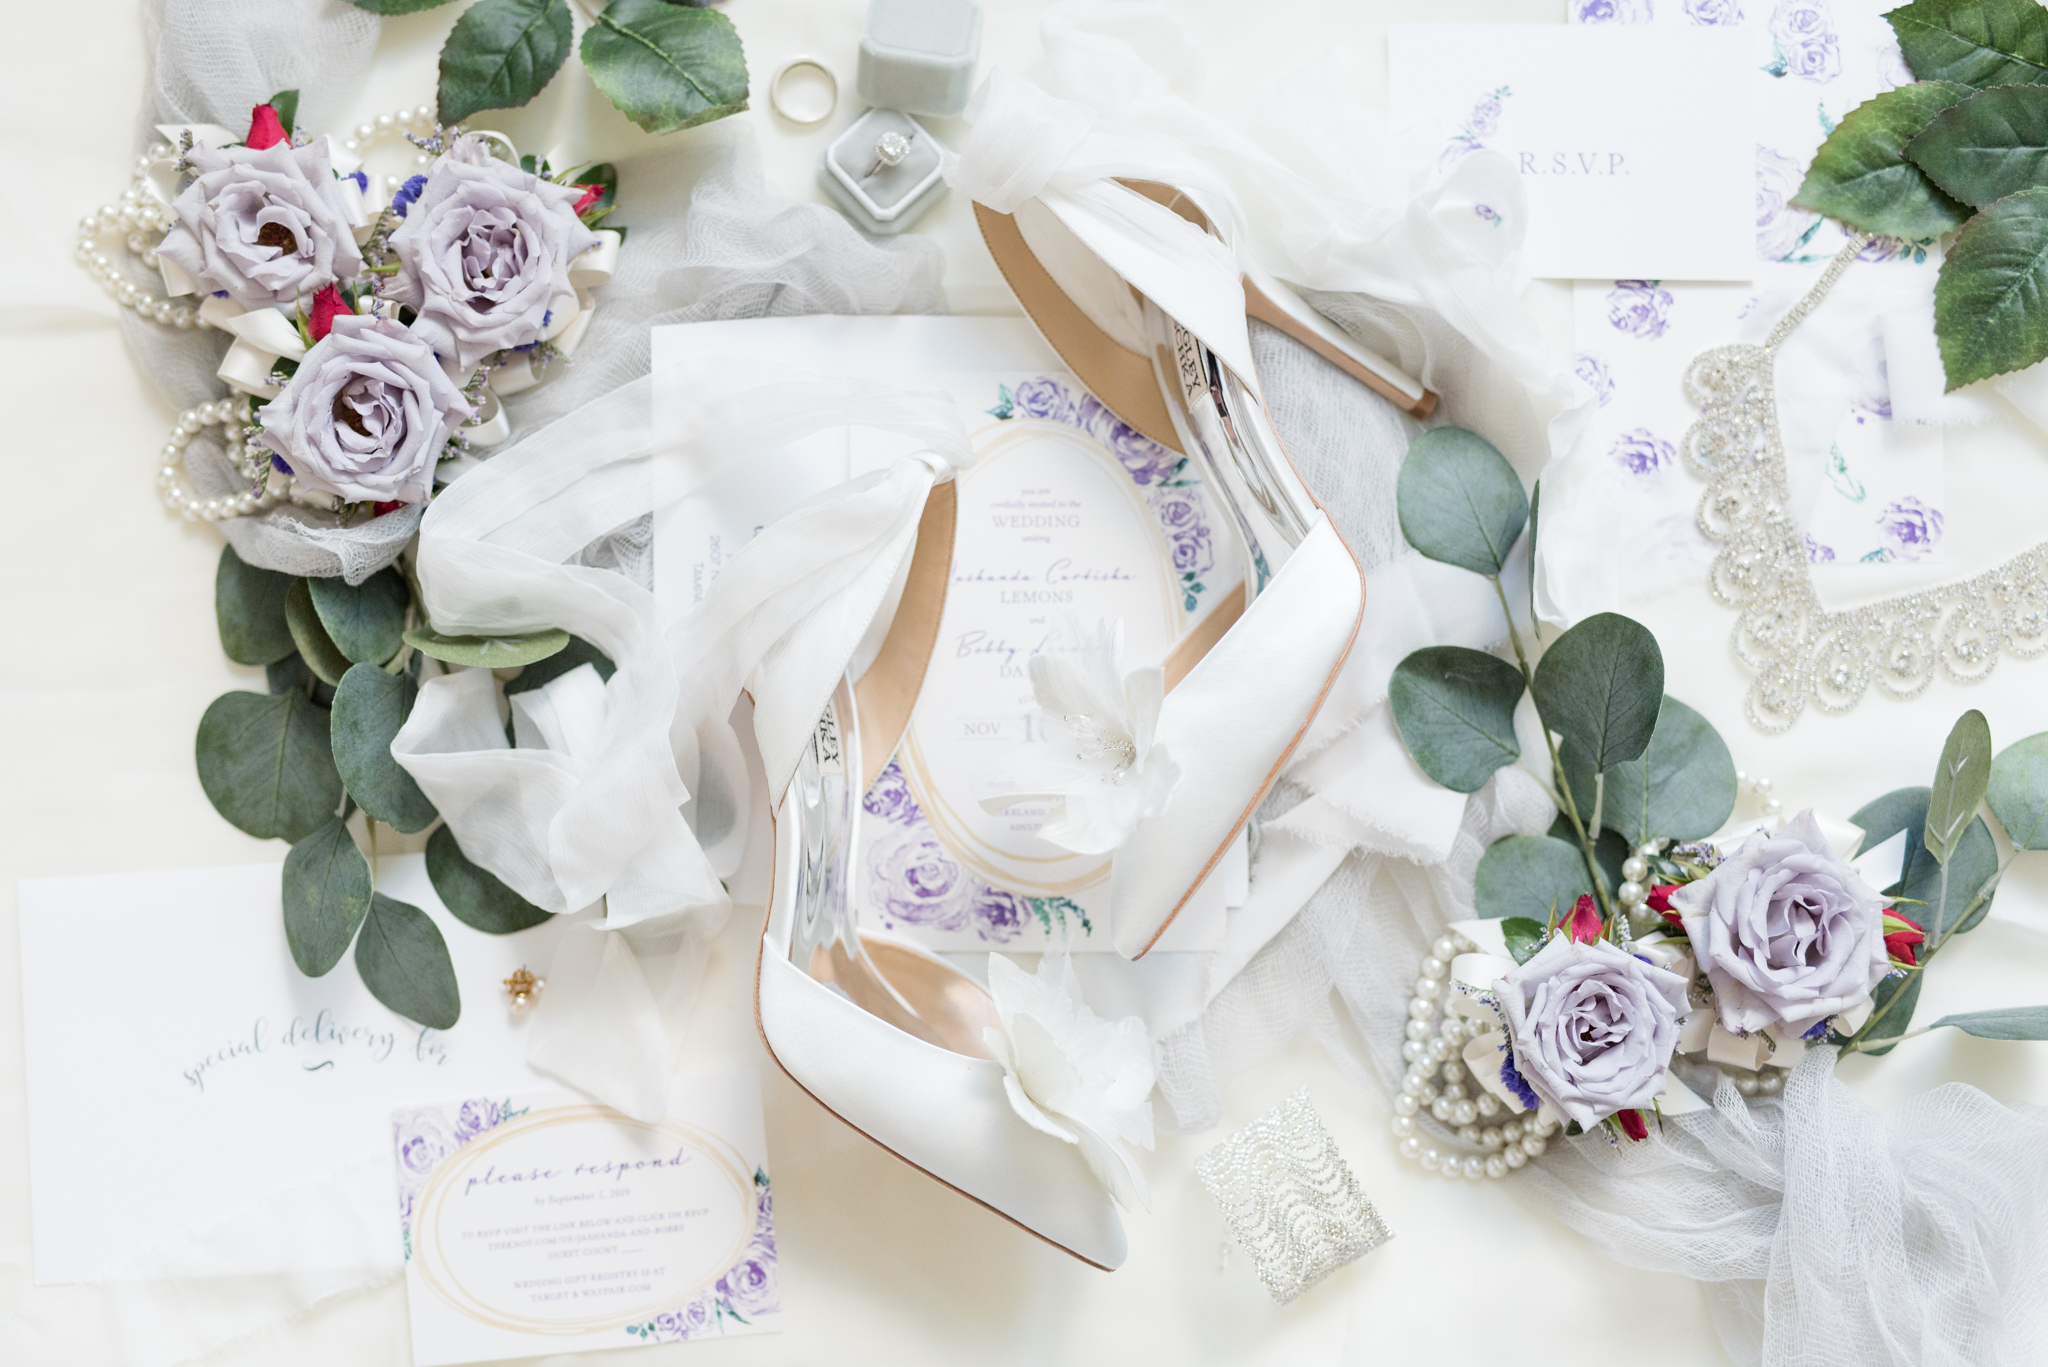 Bridal shoes sit with bridal details.